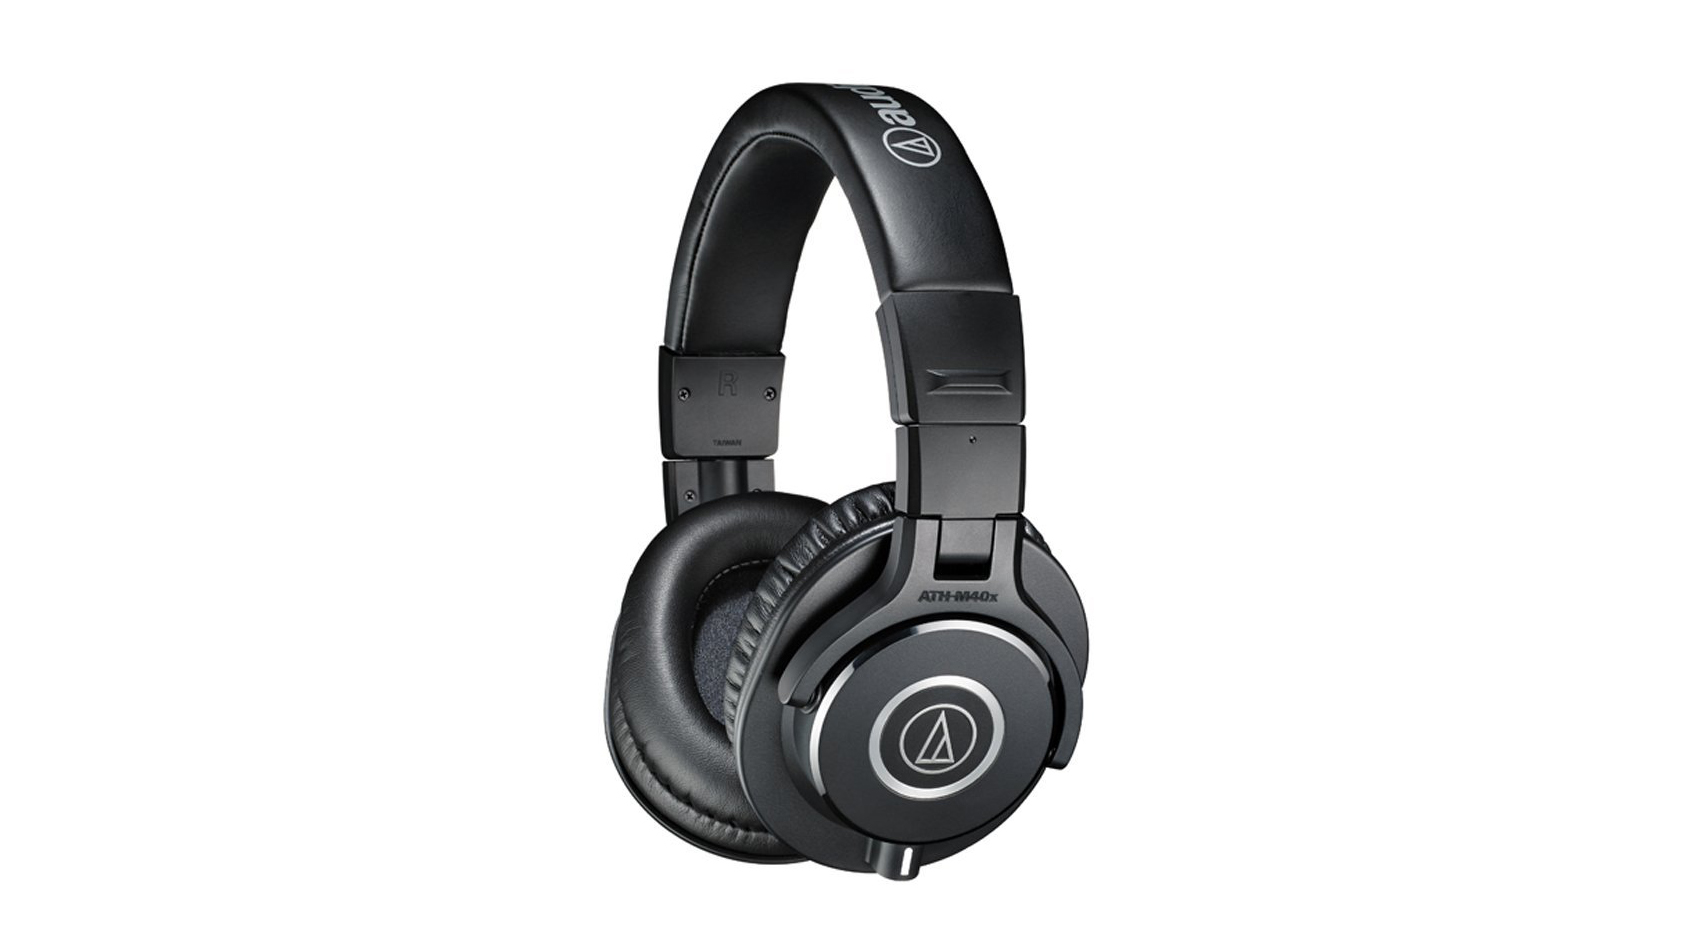 The Audio-Technica M40x studio headphones in black against a white background.